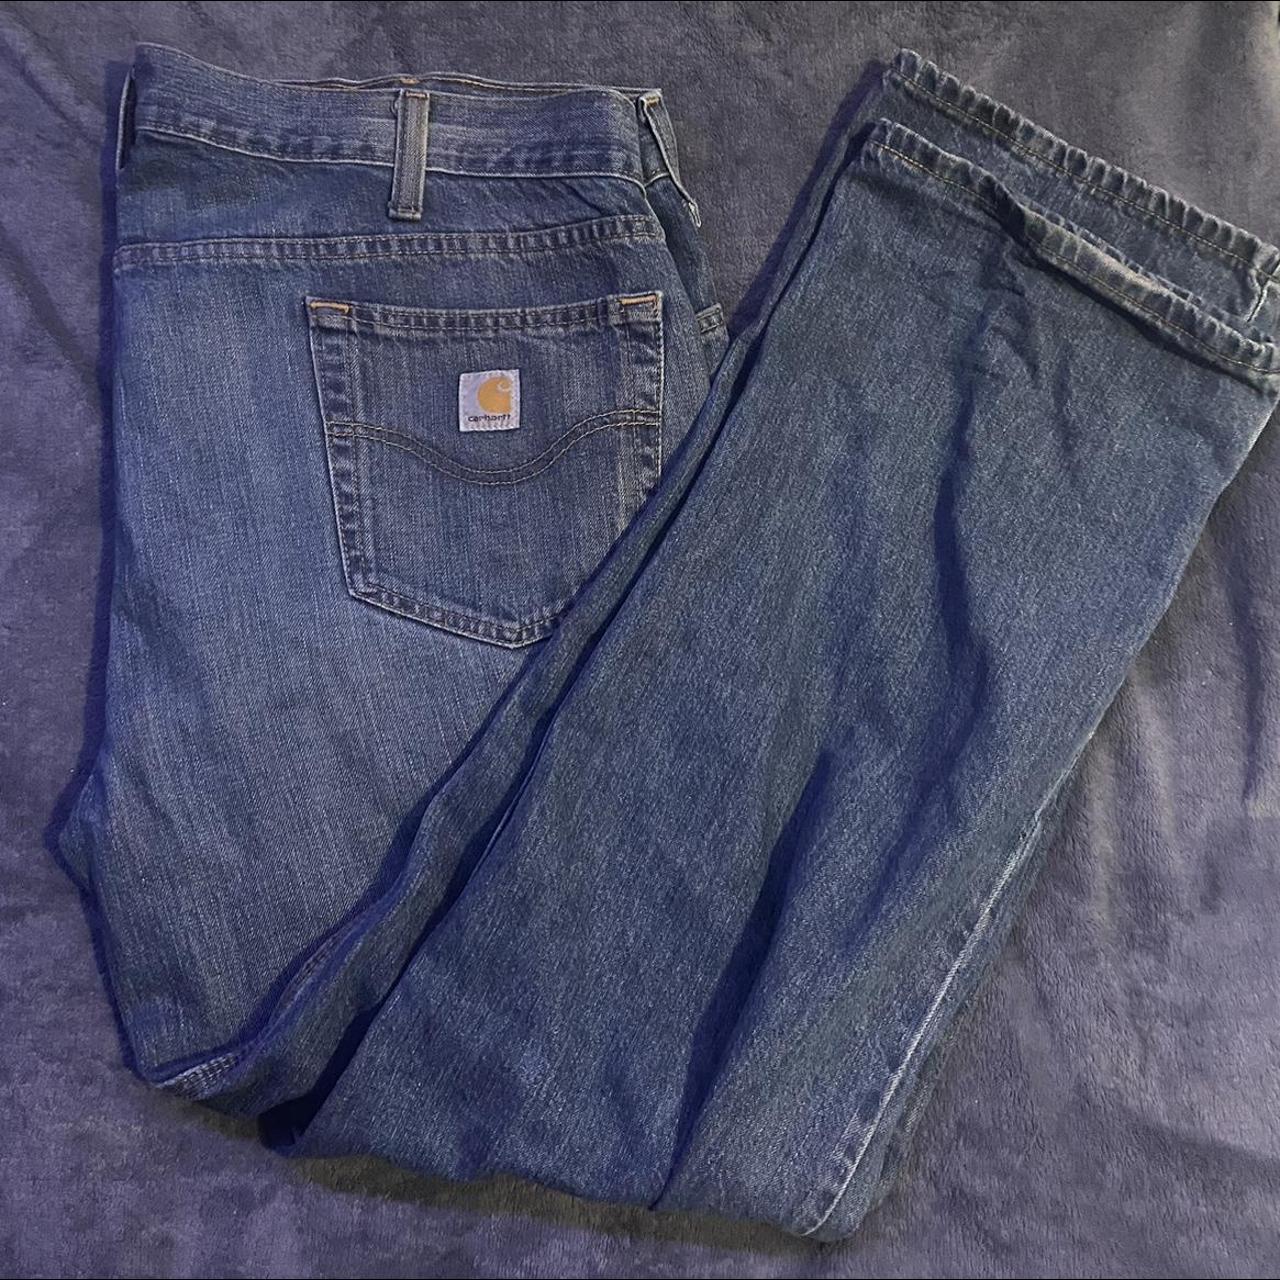 Huge Carhartt jeans - Depop